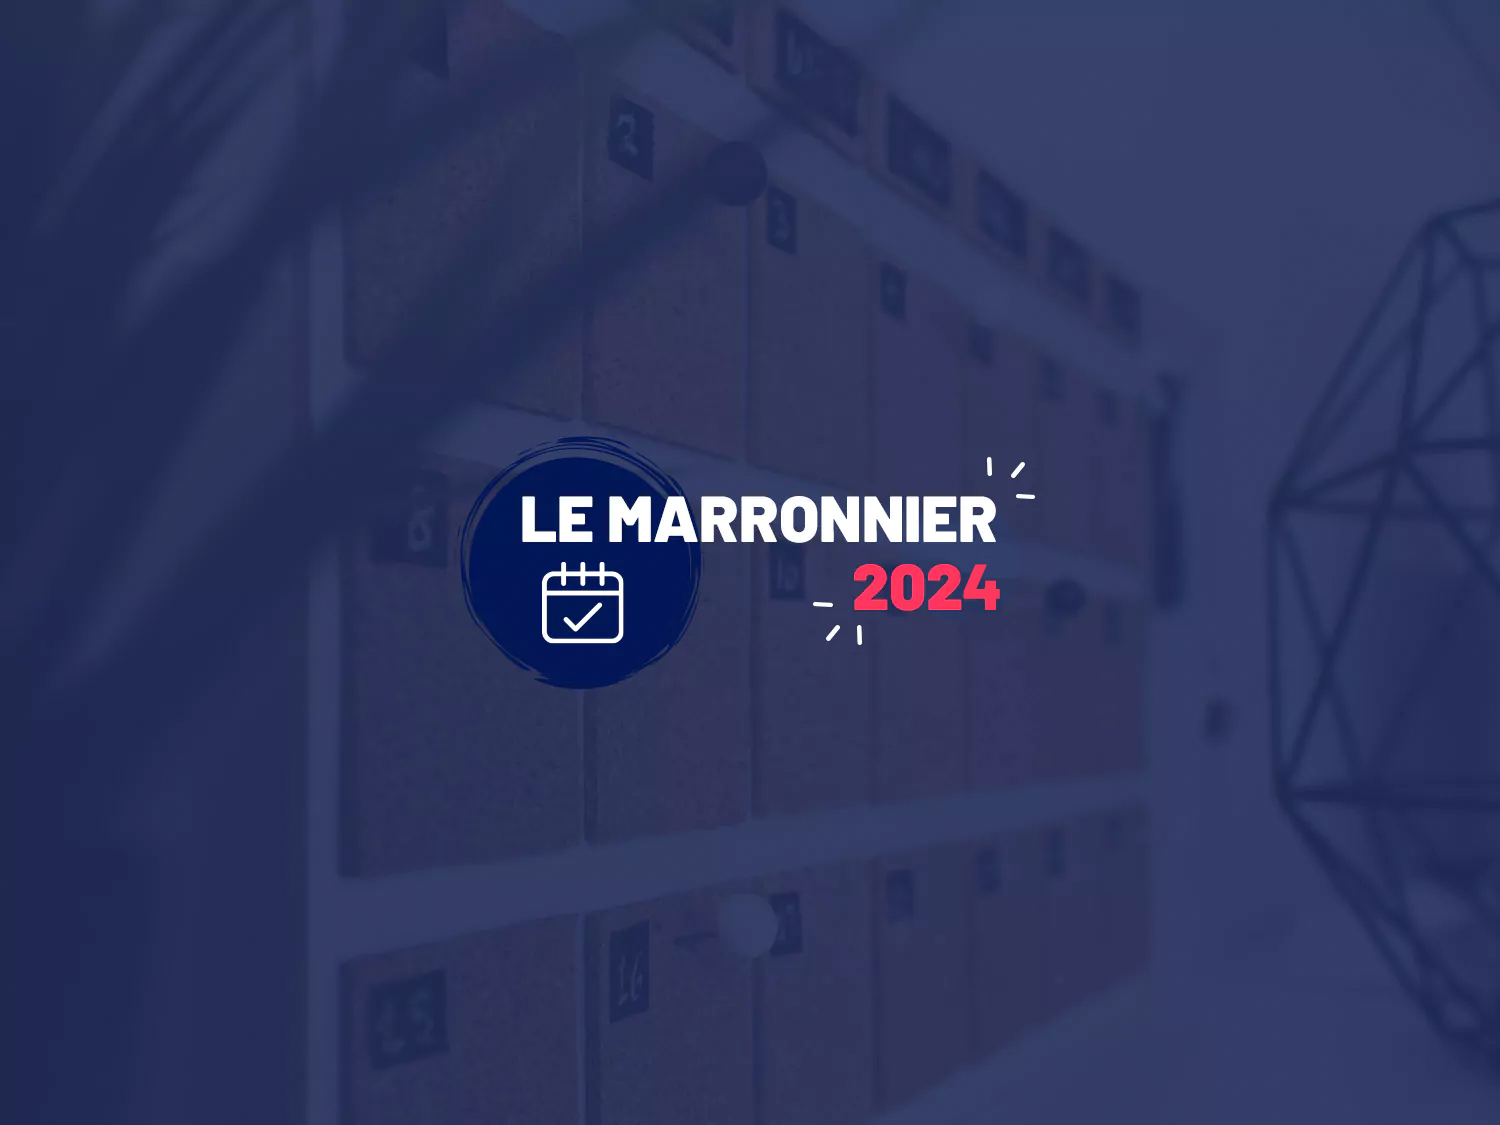 Le marronnier 2024 Compos’it